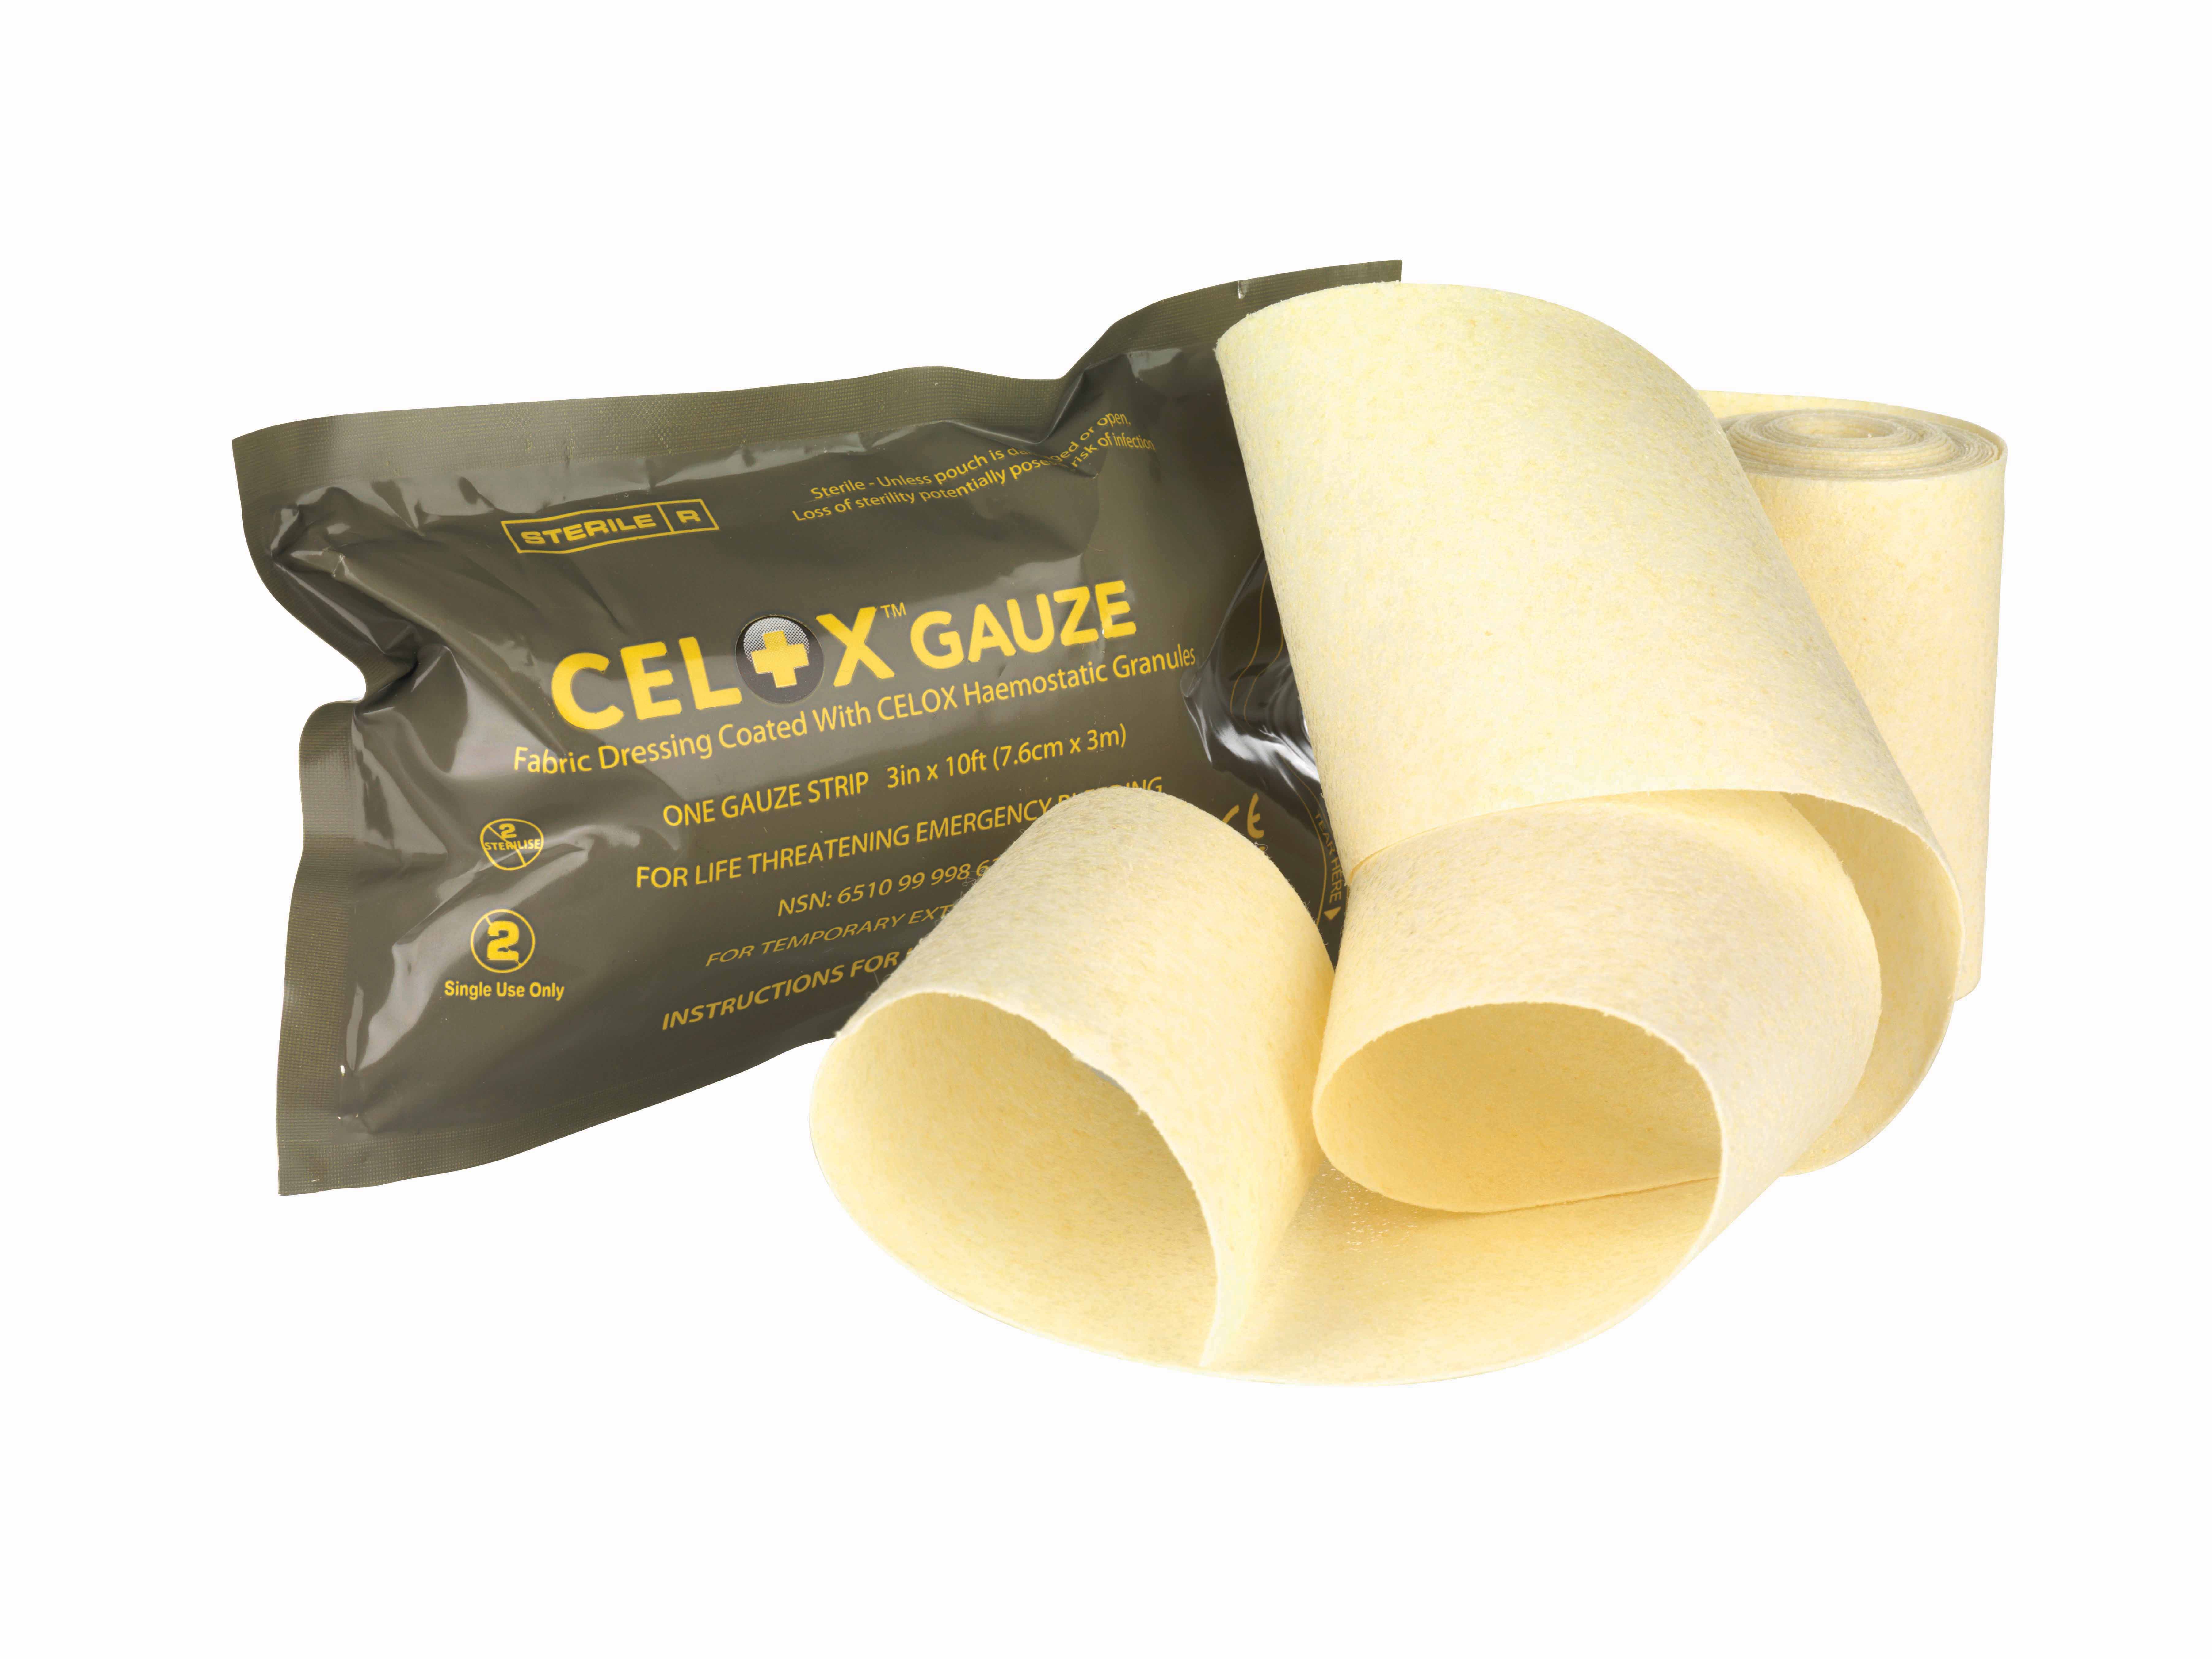 Celox Haemostatic Gauze 10' Roll